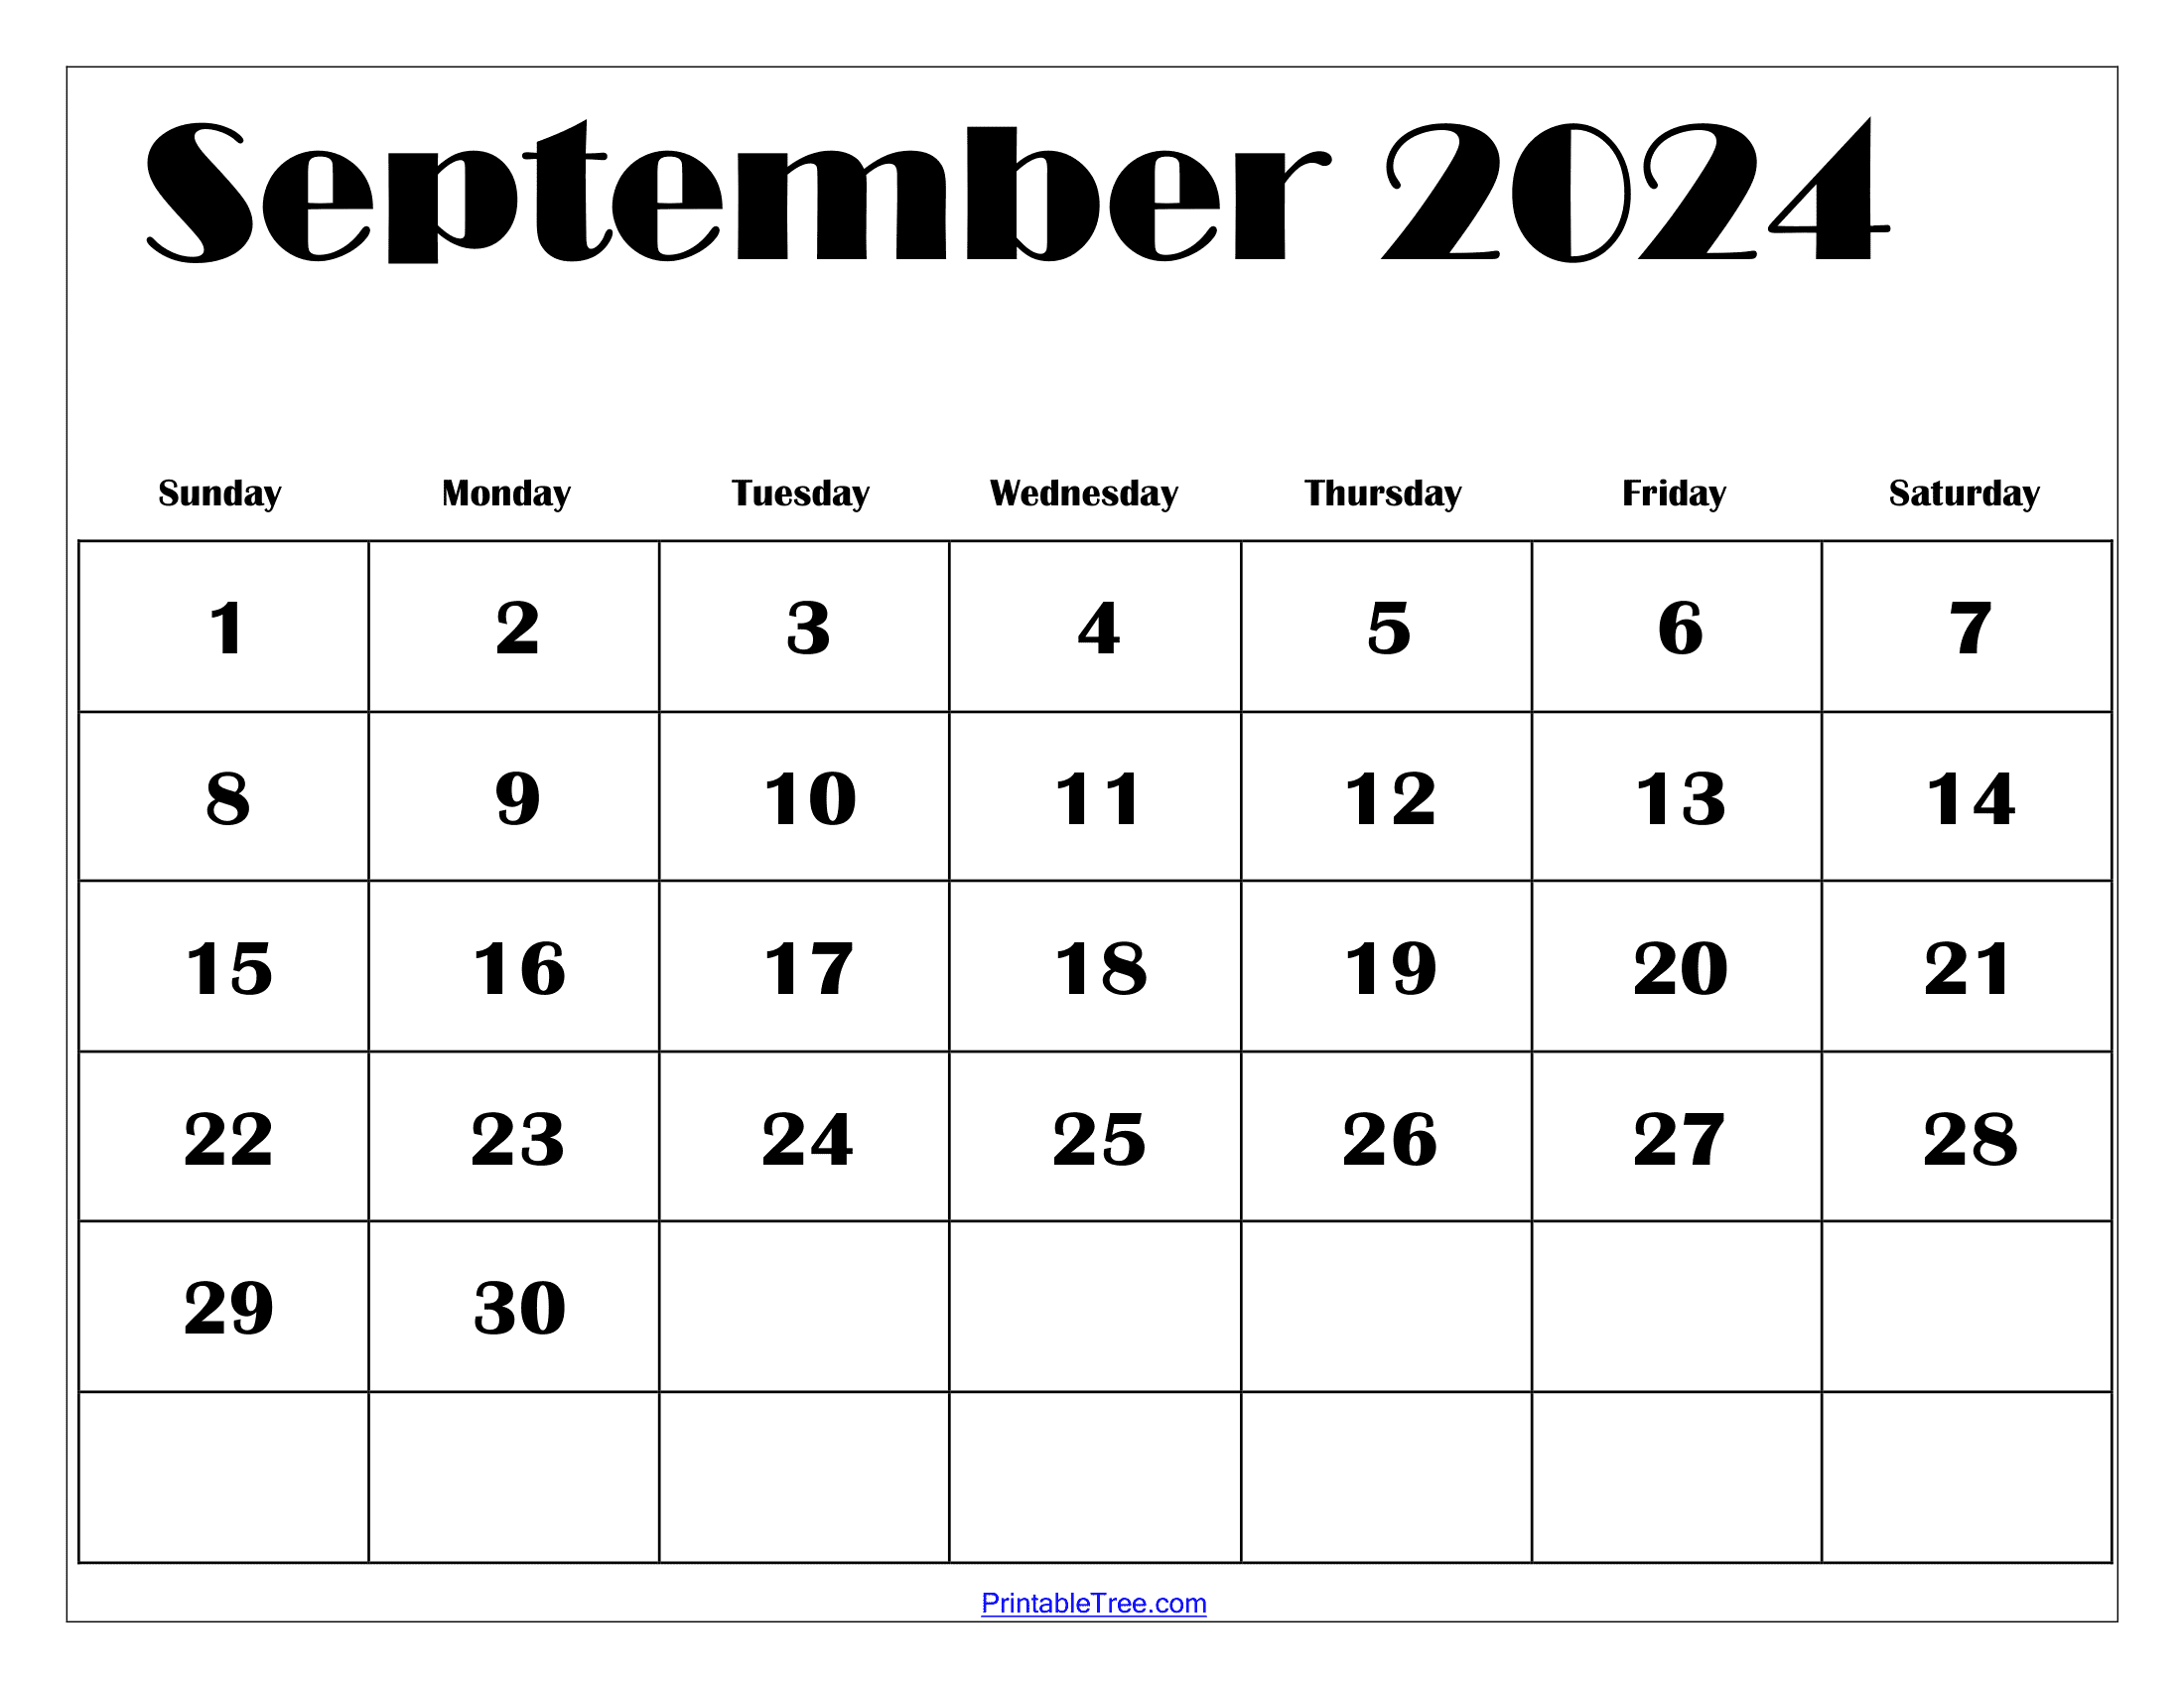 September 2024 Calendar Printable Pdf With Holidays for September 2024 Free Printable Calendar